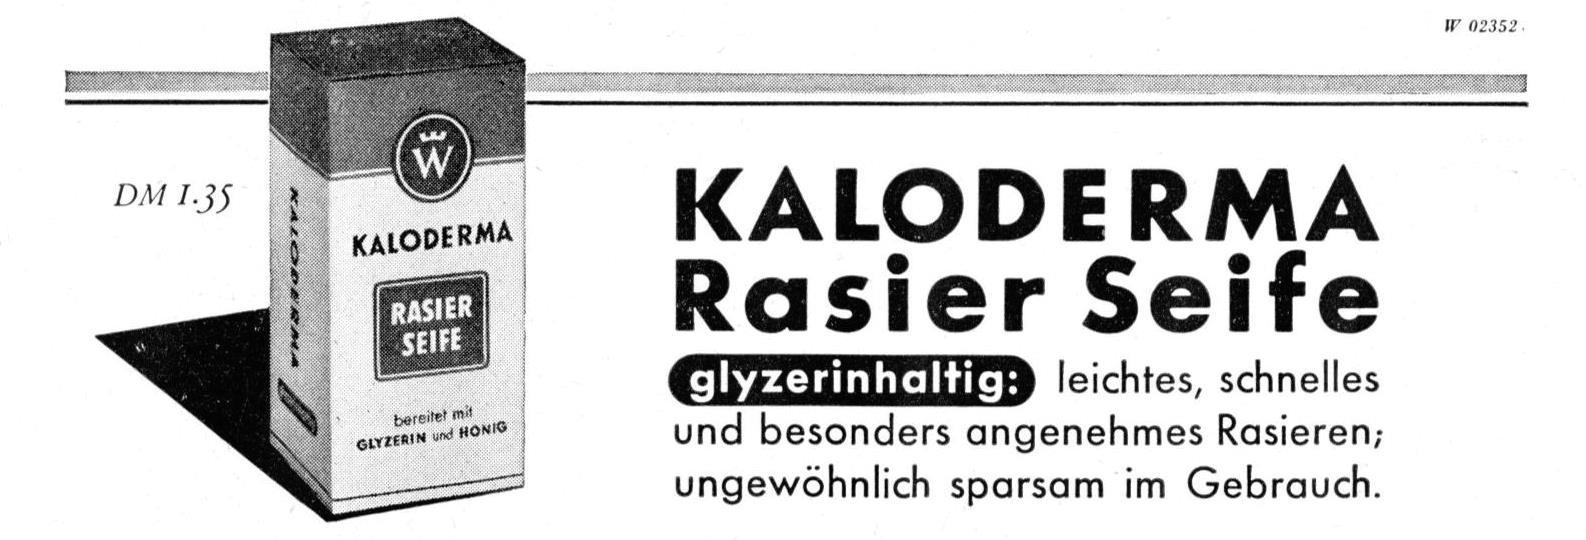 Kaloderma 1953 0.jpg